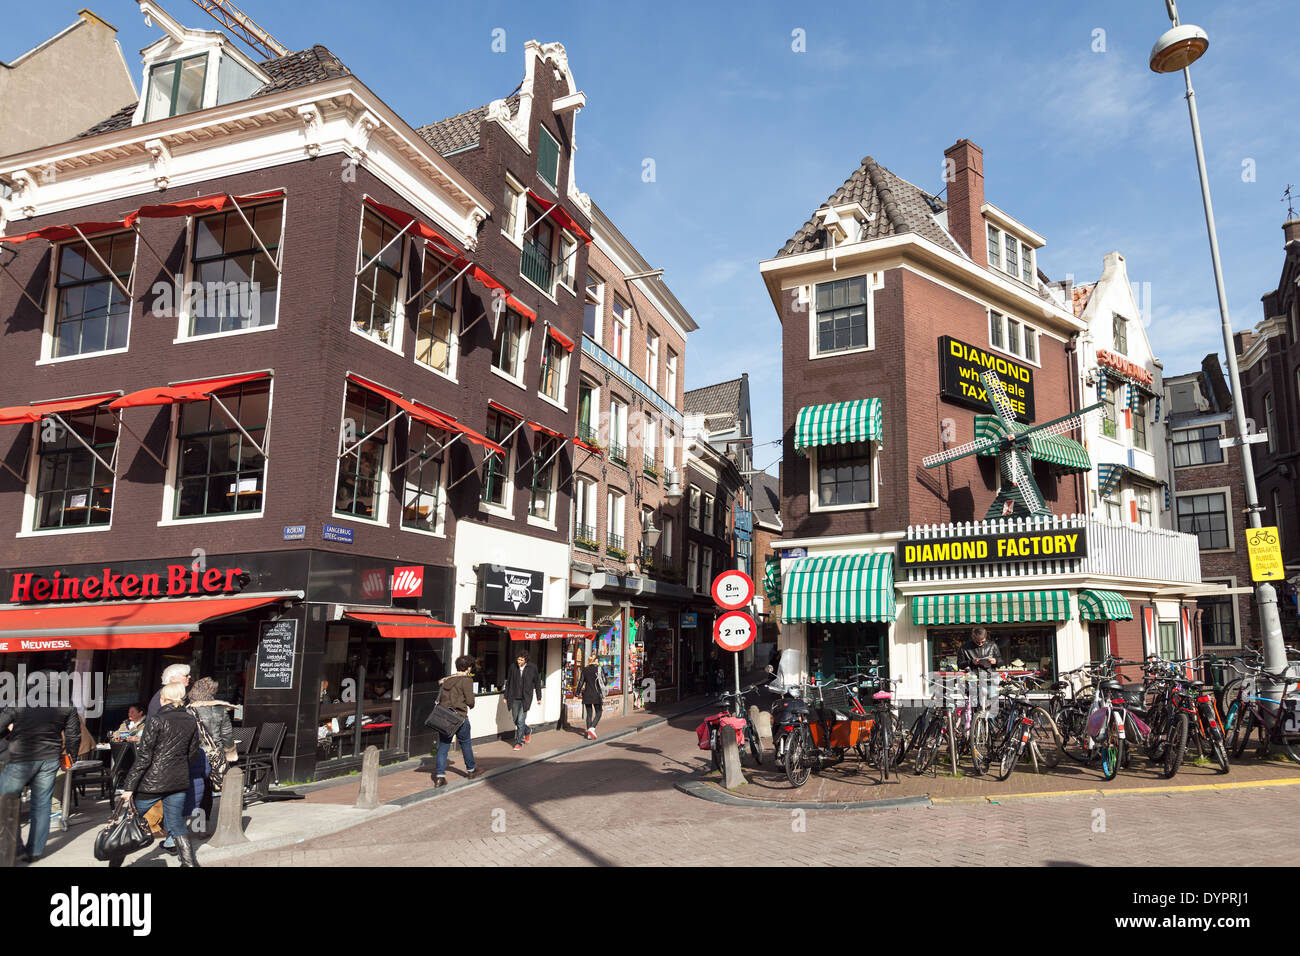 Amsterdam street view with diamond factory Stock Photo